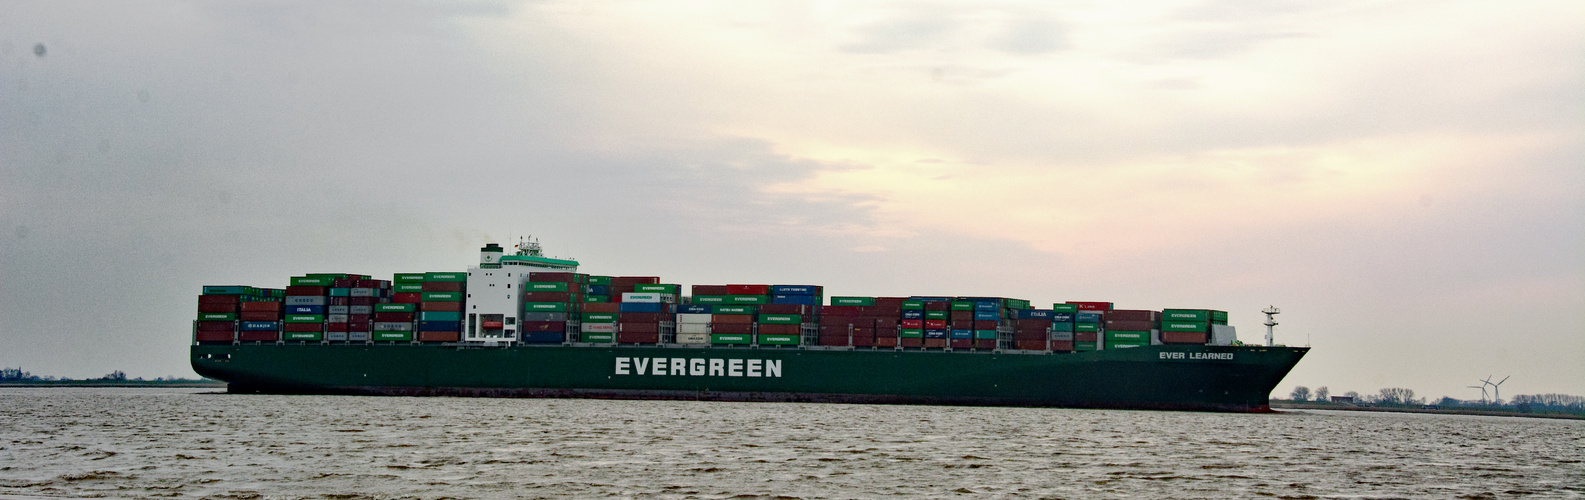 Kollmar Bielenberg Evergrenn Containerschiff